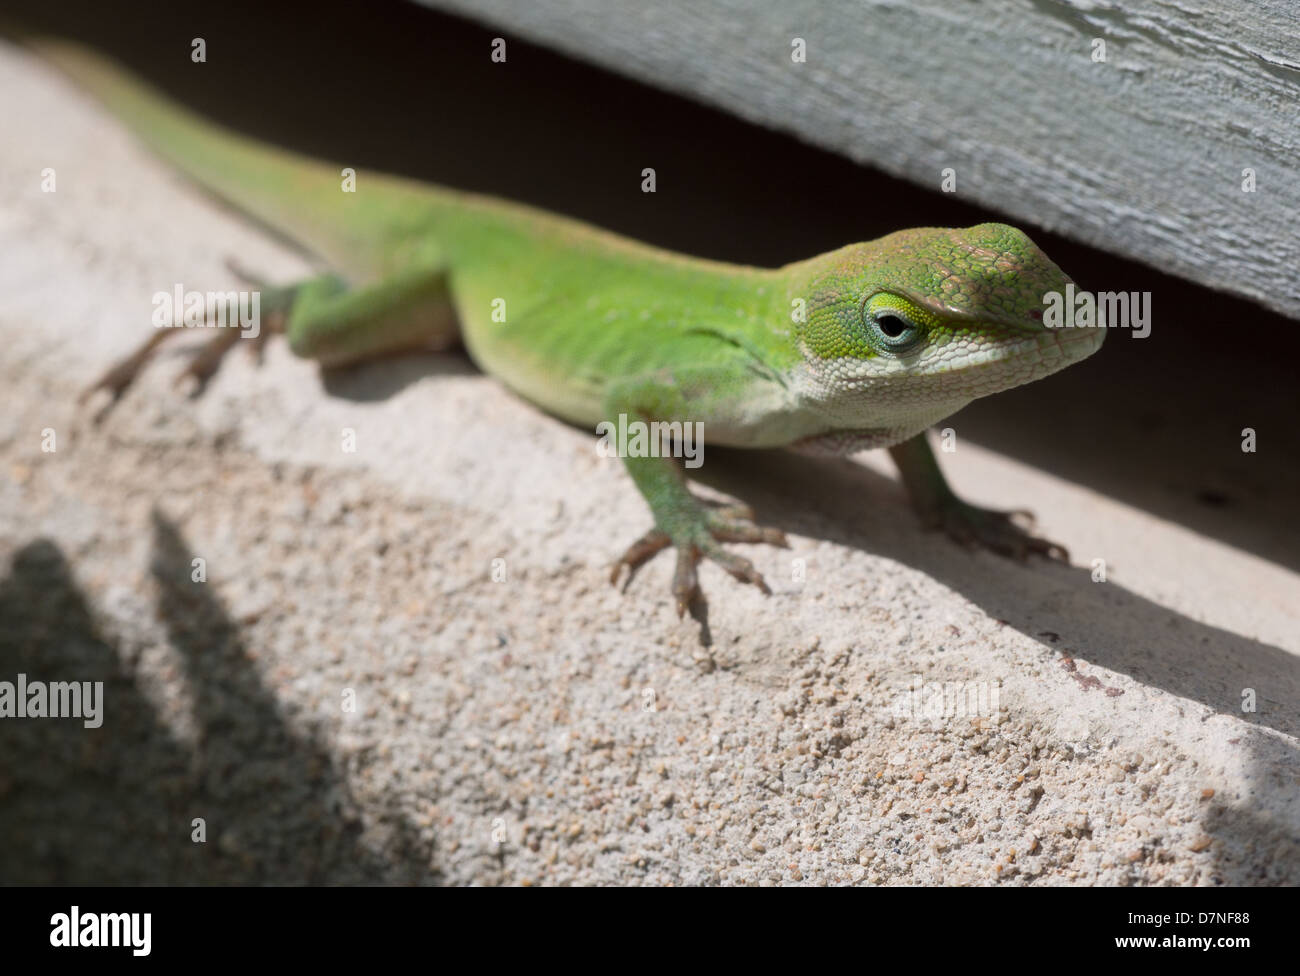 Green Anole lizard hiding under a wooden board in the garden Stock Photo